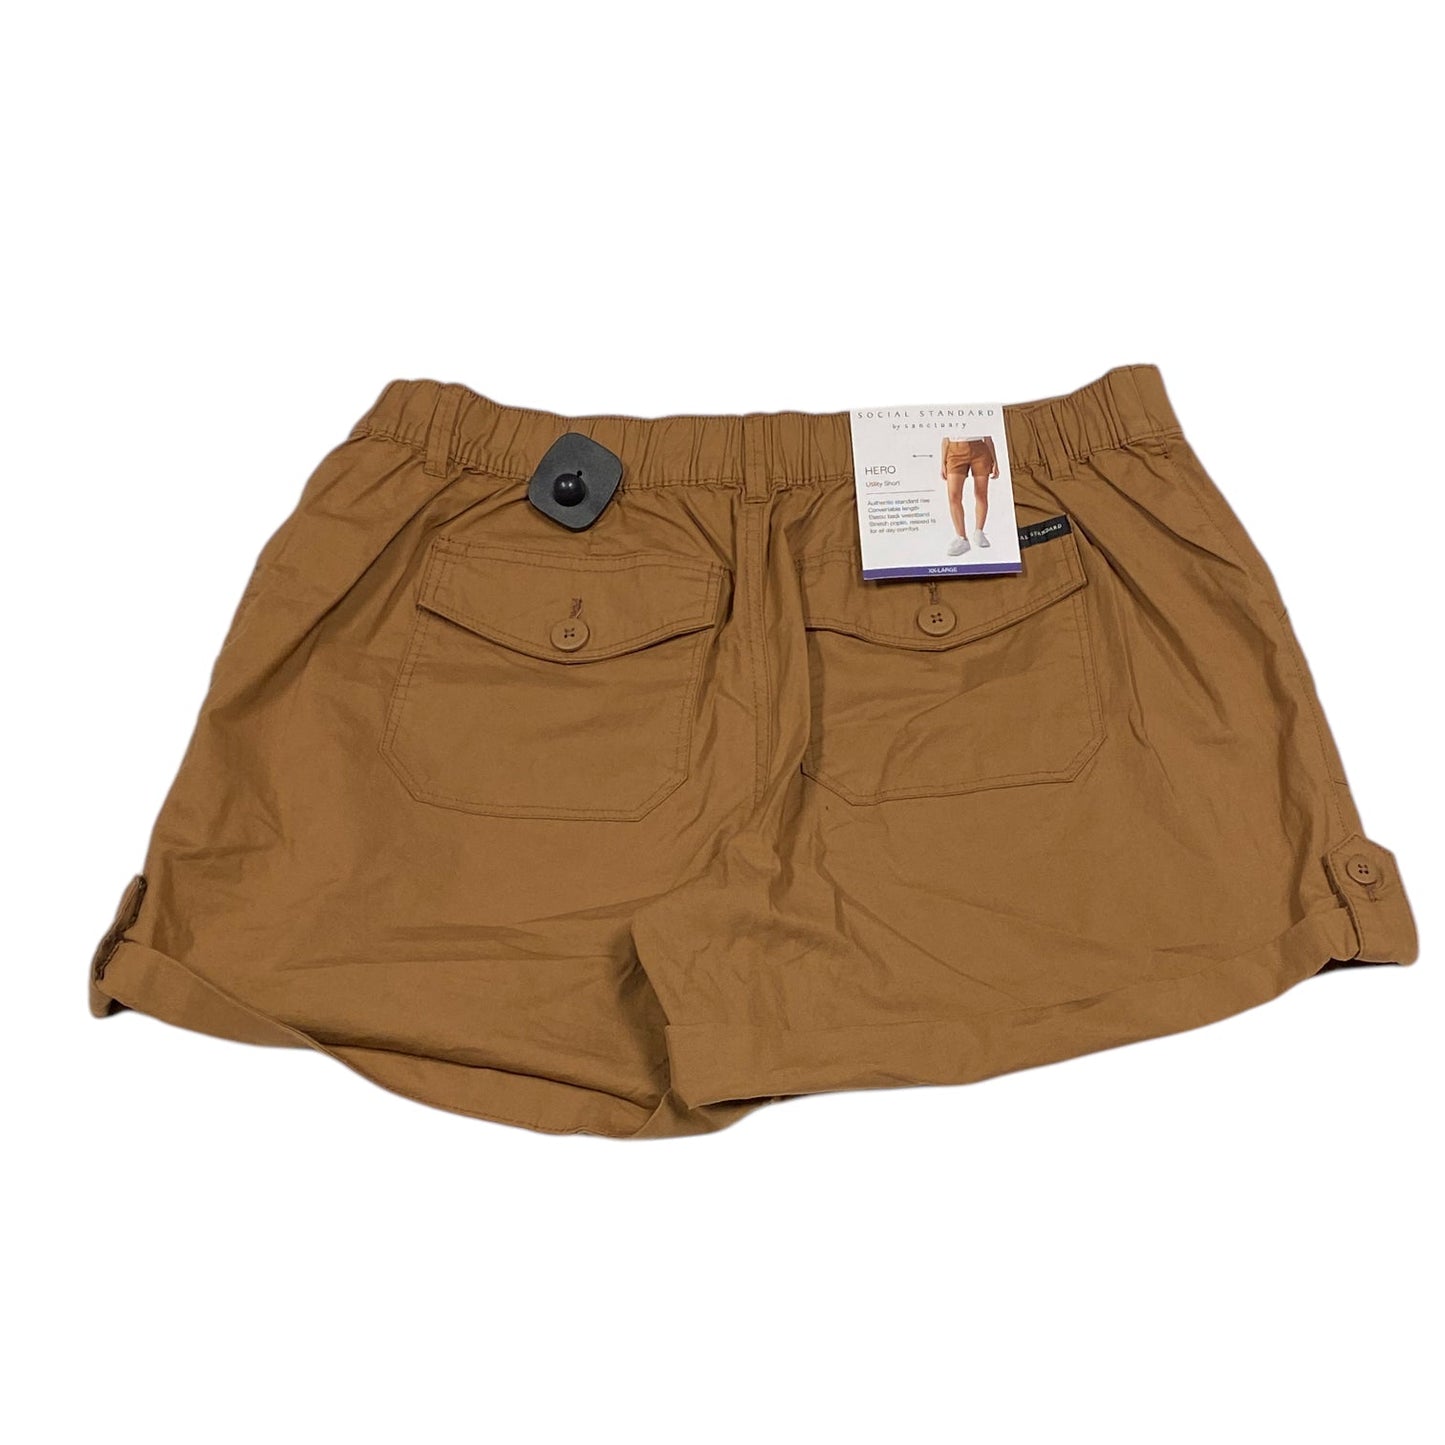 Shorts By Sanctuary  Size: Xxl